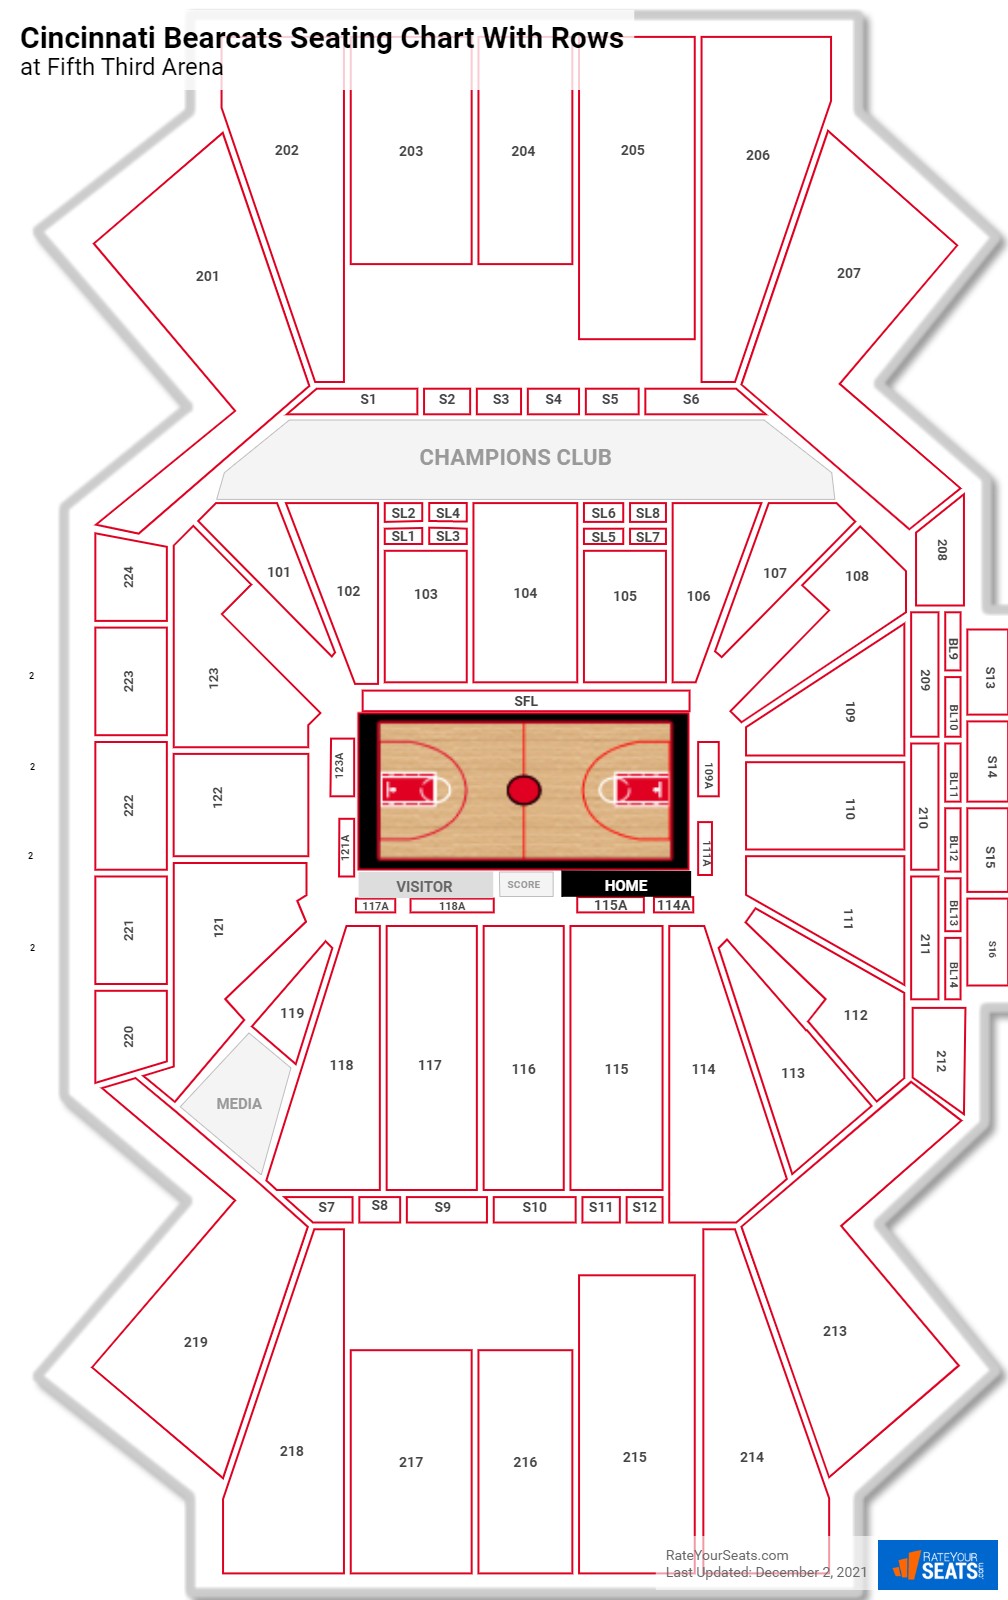 Fifth Third Arena Seating for Cincinnati Basketball